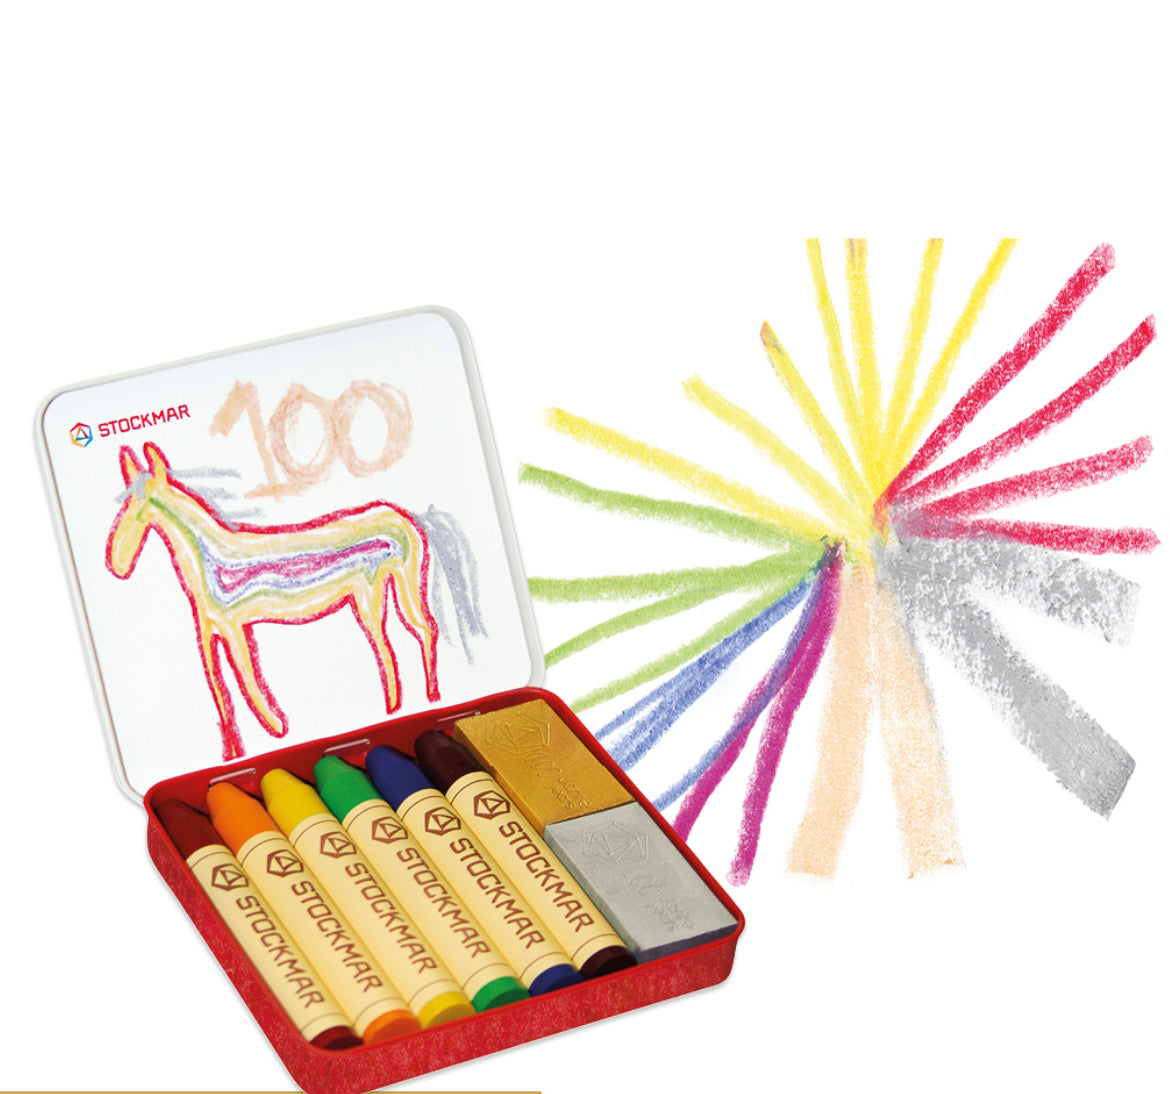 Rainbow Crayons STOCKMAR Limited Edition Rainbow - Alder & Alouette